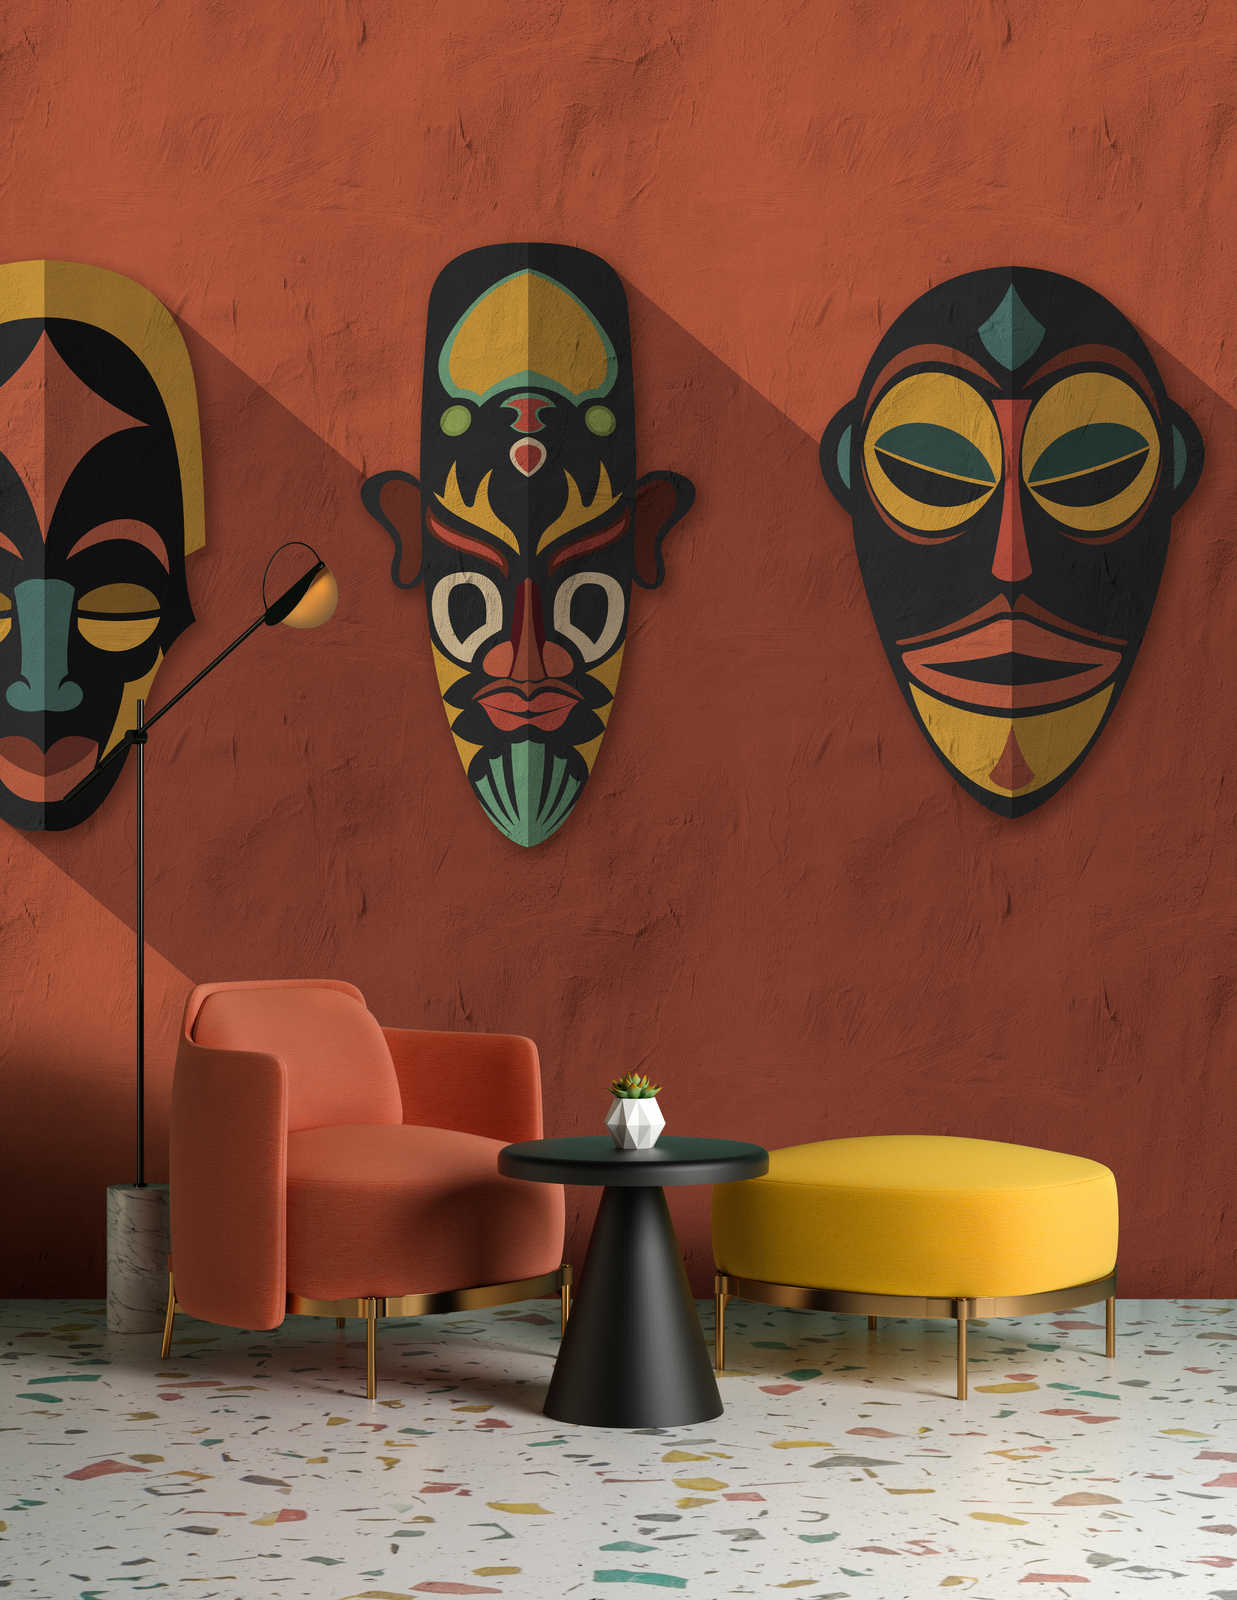             Zulu 2 - photo wallpaper terracotta orange, Africa masks Zulu design
        